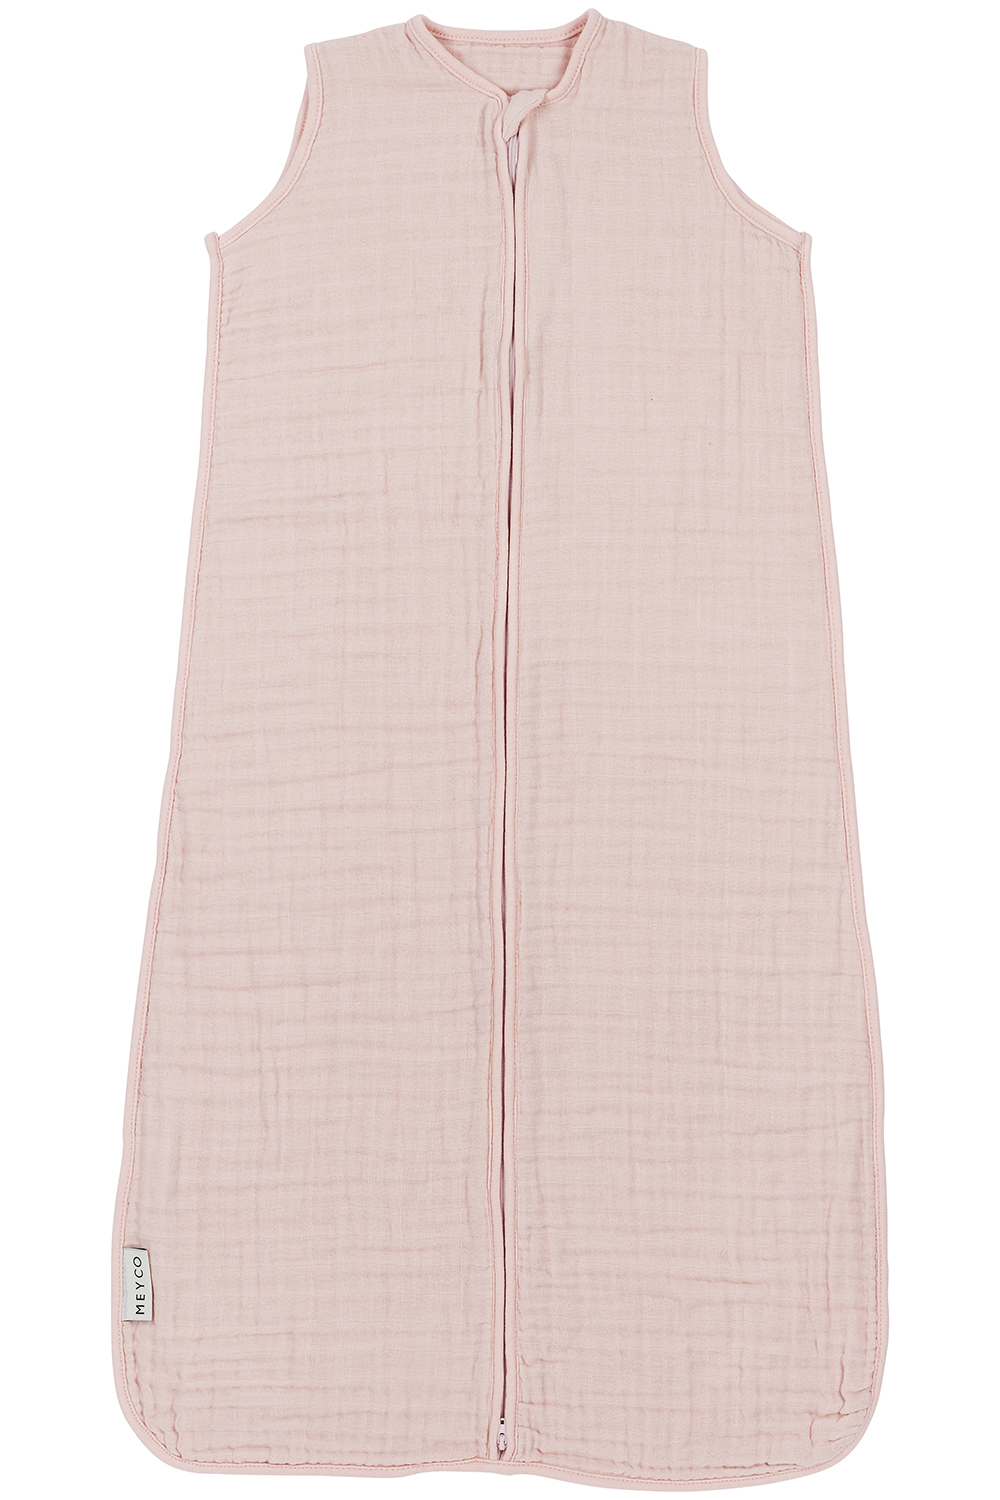 Sleepingbag pre-washed muslin Uni - soft pink - 60cm